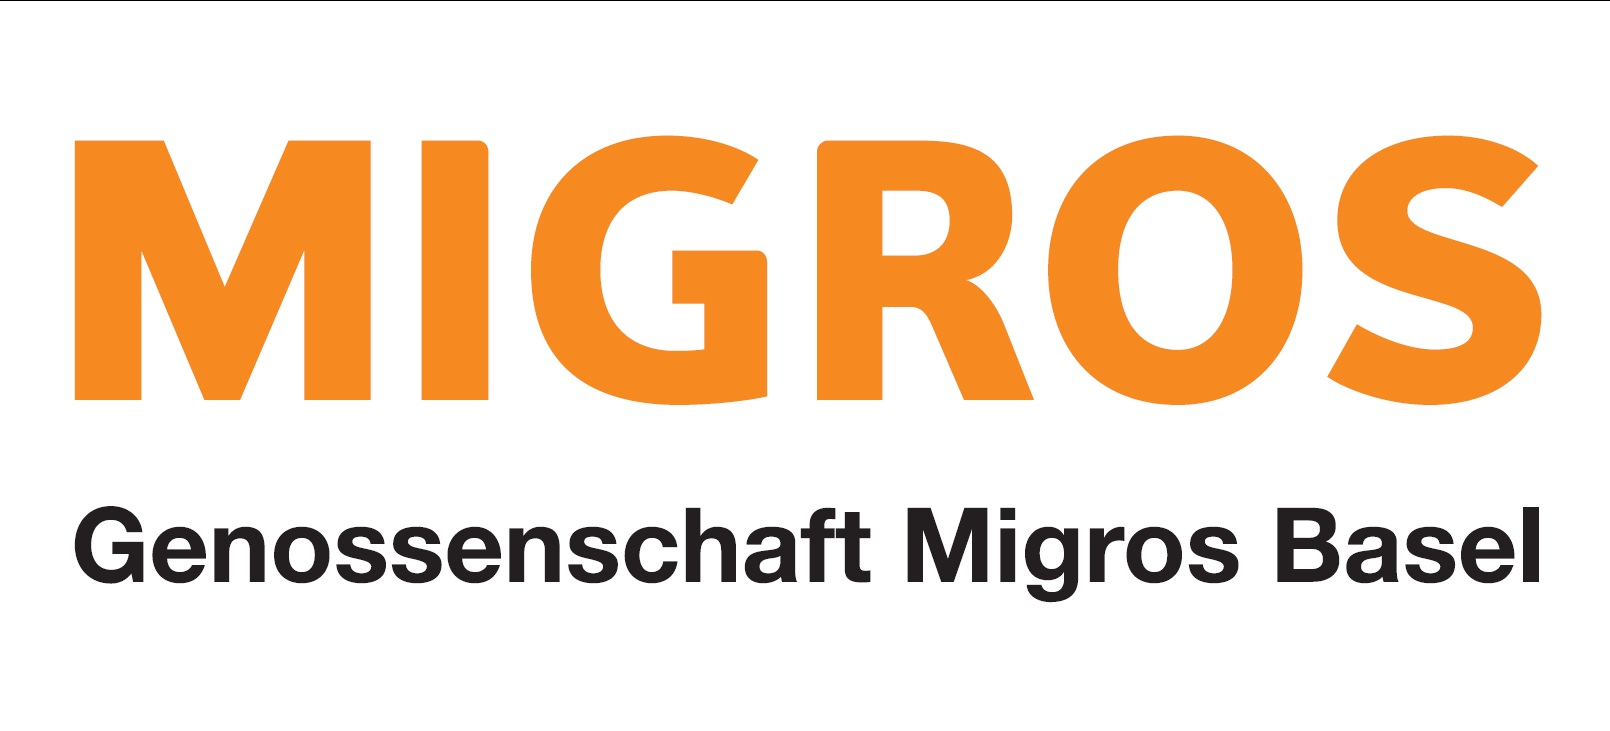 Migros_Logo_Basel.jpg